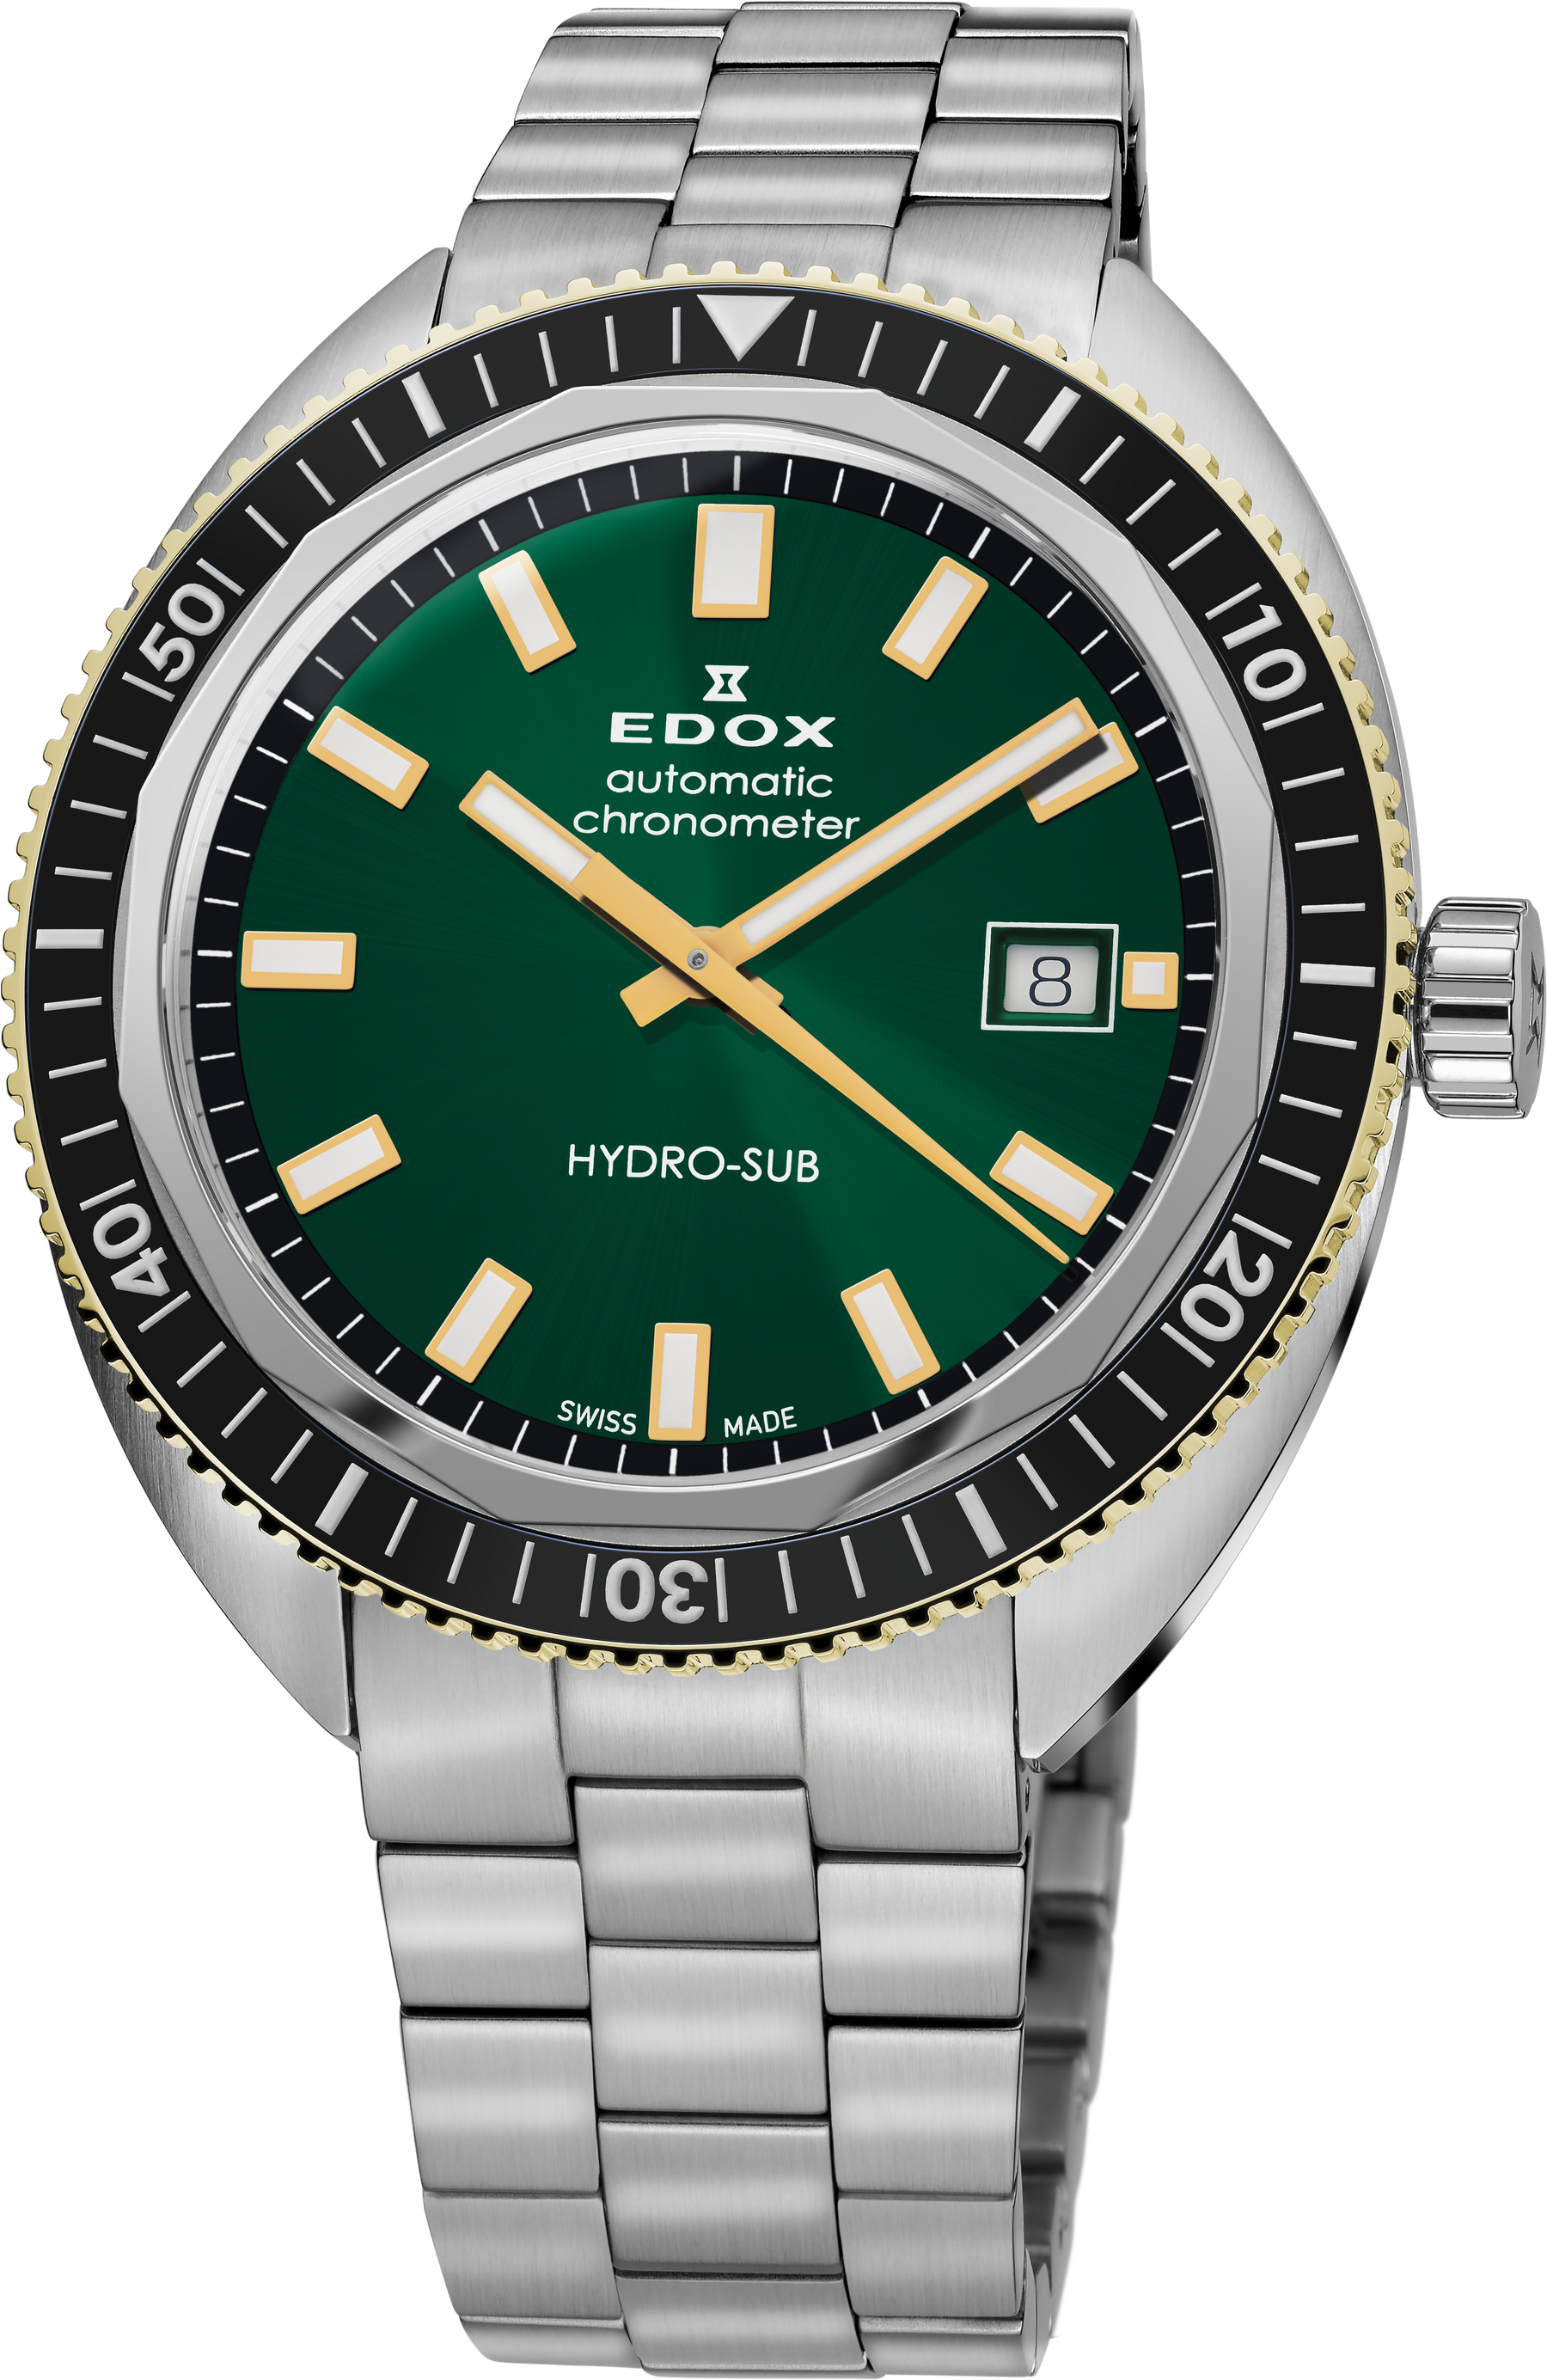 EDOX HYDRO-SUB DATE AUTOMATIC CHRONOMETER LIMITED EDITION